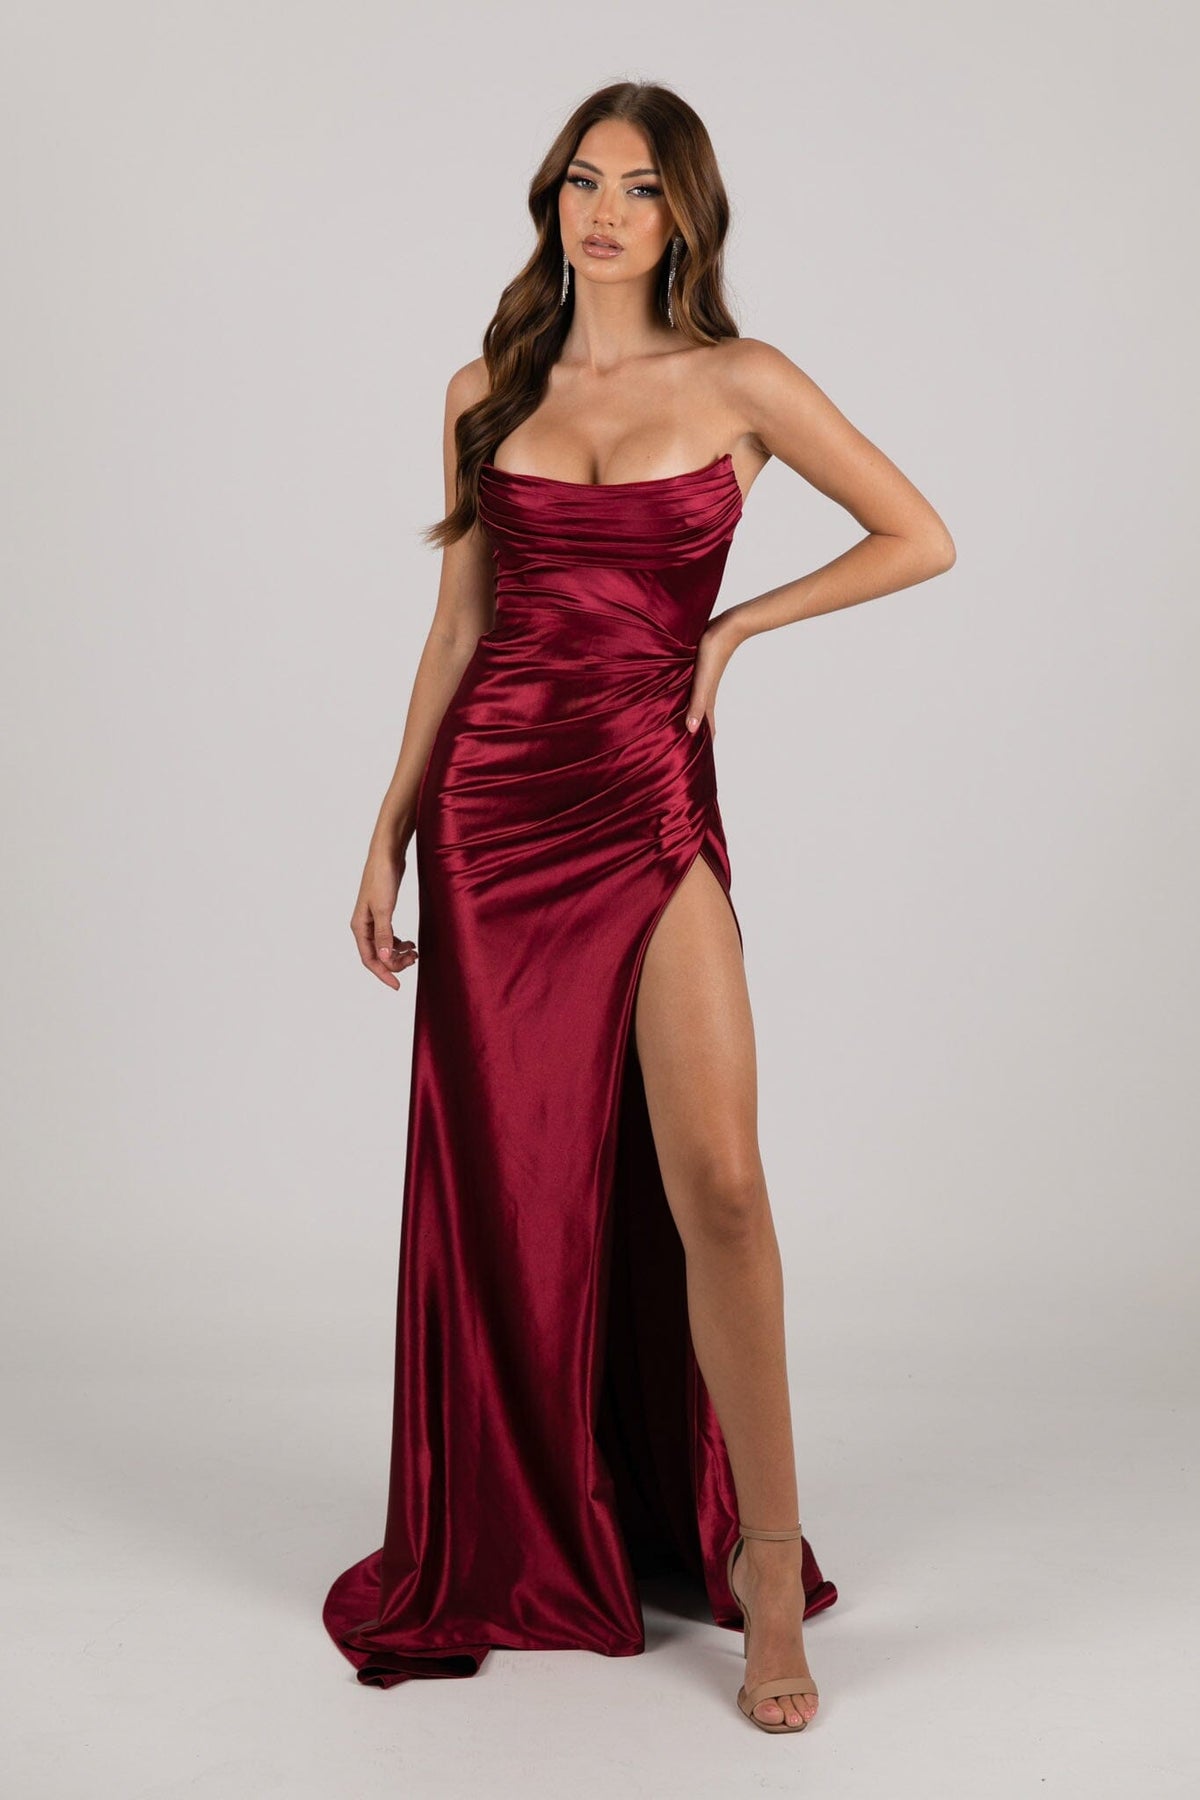 Burgundy Dark Red Stretch Satin Formal Gown with Bustier Strapless Neckline, Gathered Detail and Thigh High Side Slit